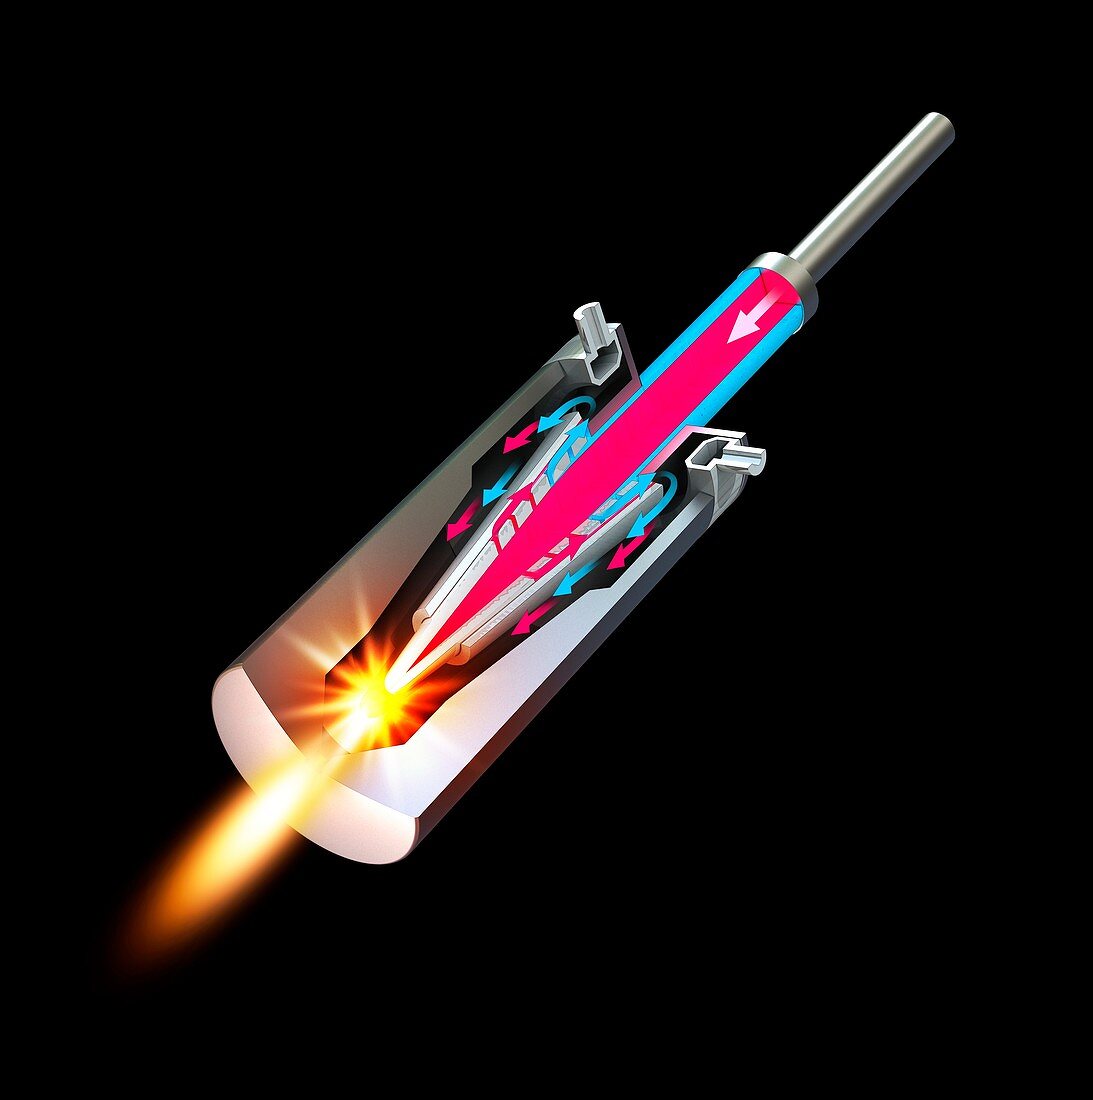 Autophage rocket, illustration